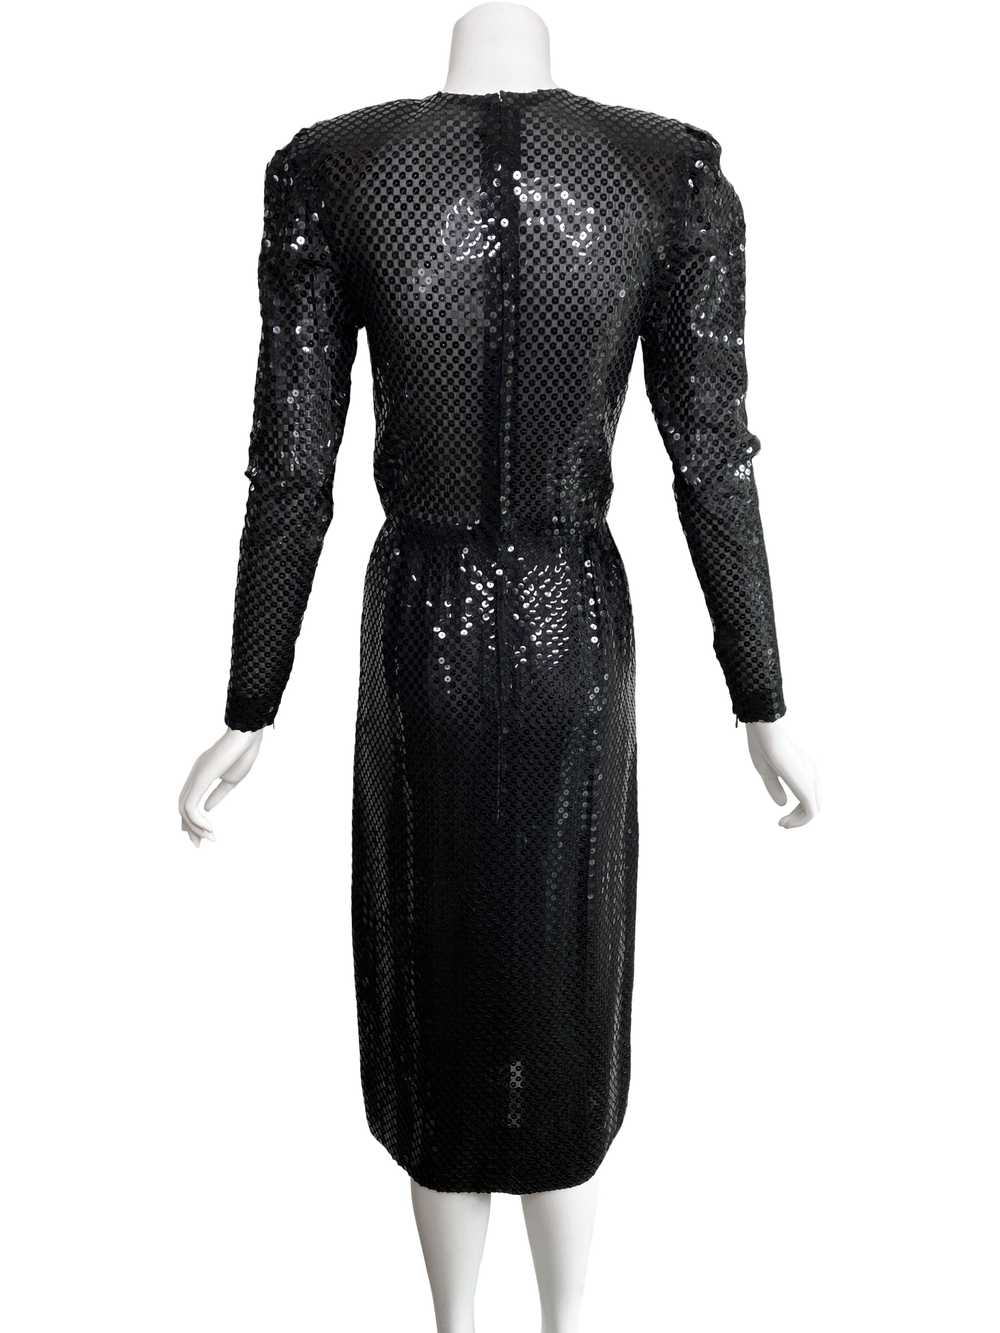 Givenchy Boutique 1970s Sequin Midi Dress - image 5